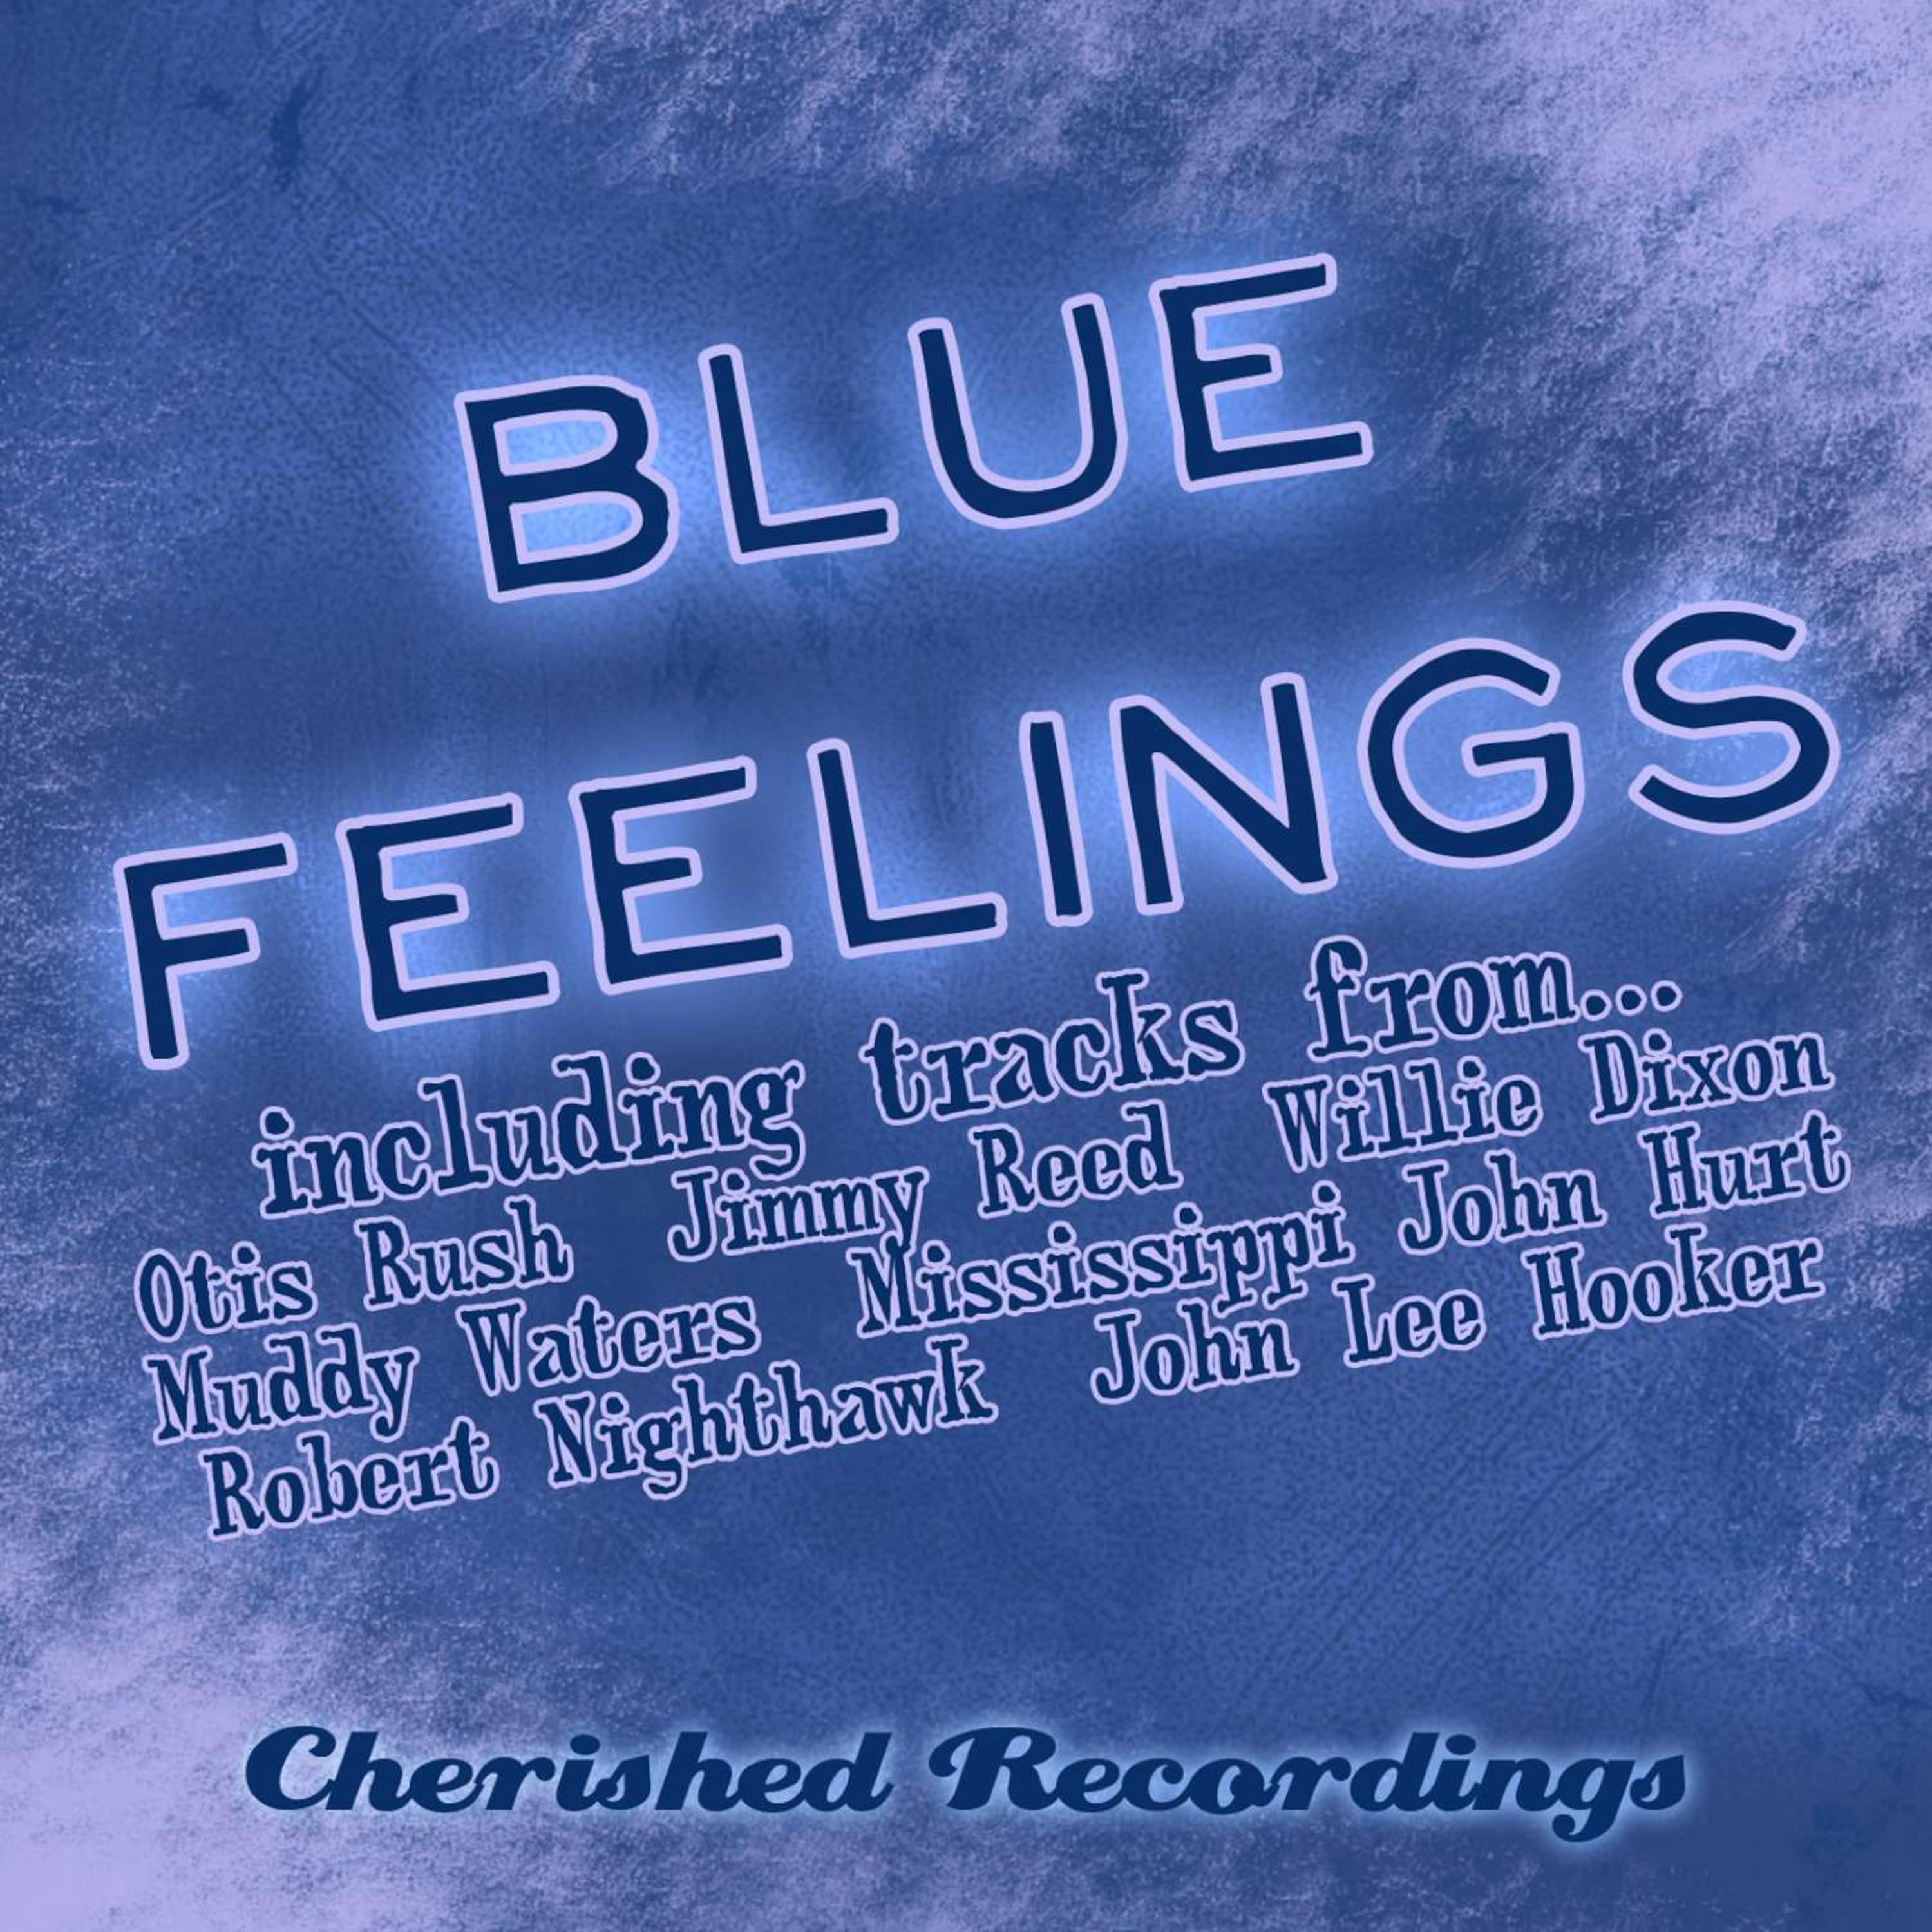 Blue Feelings